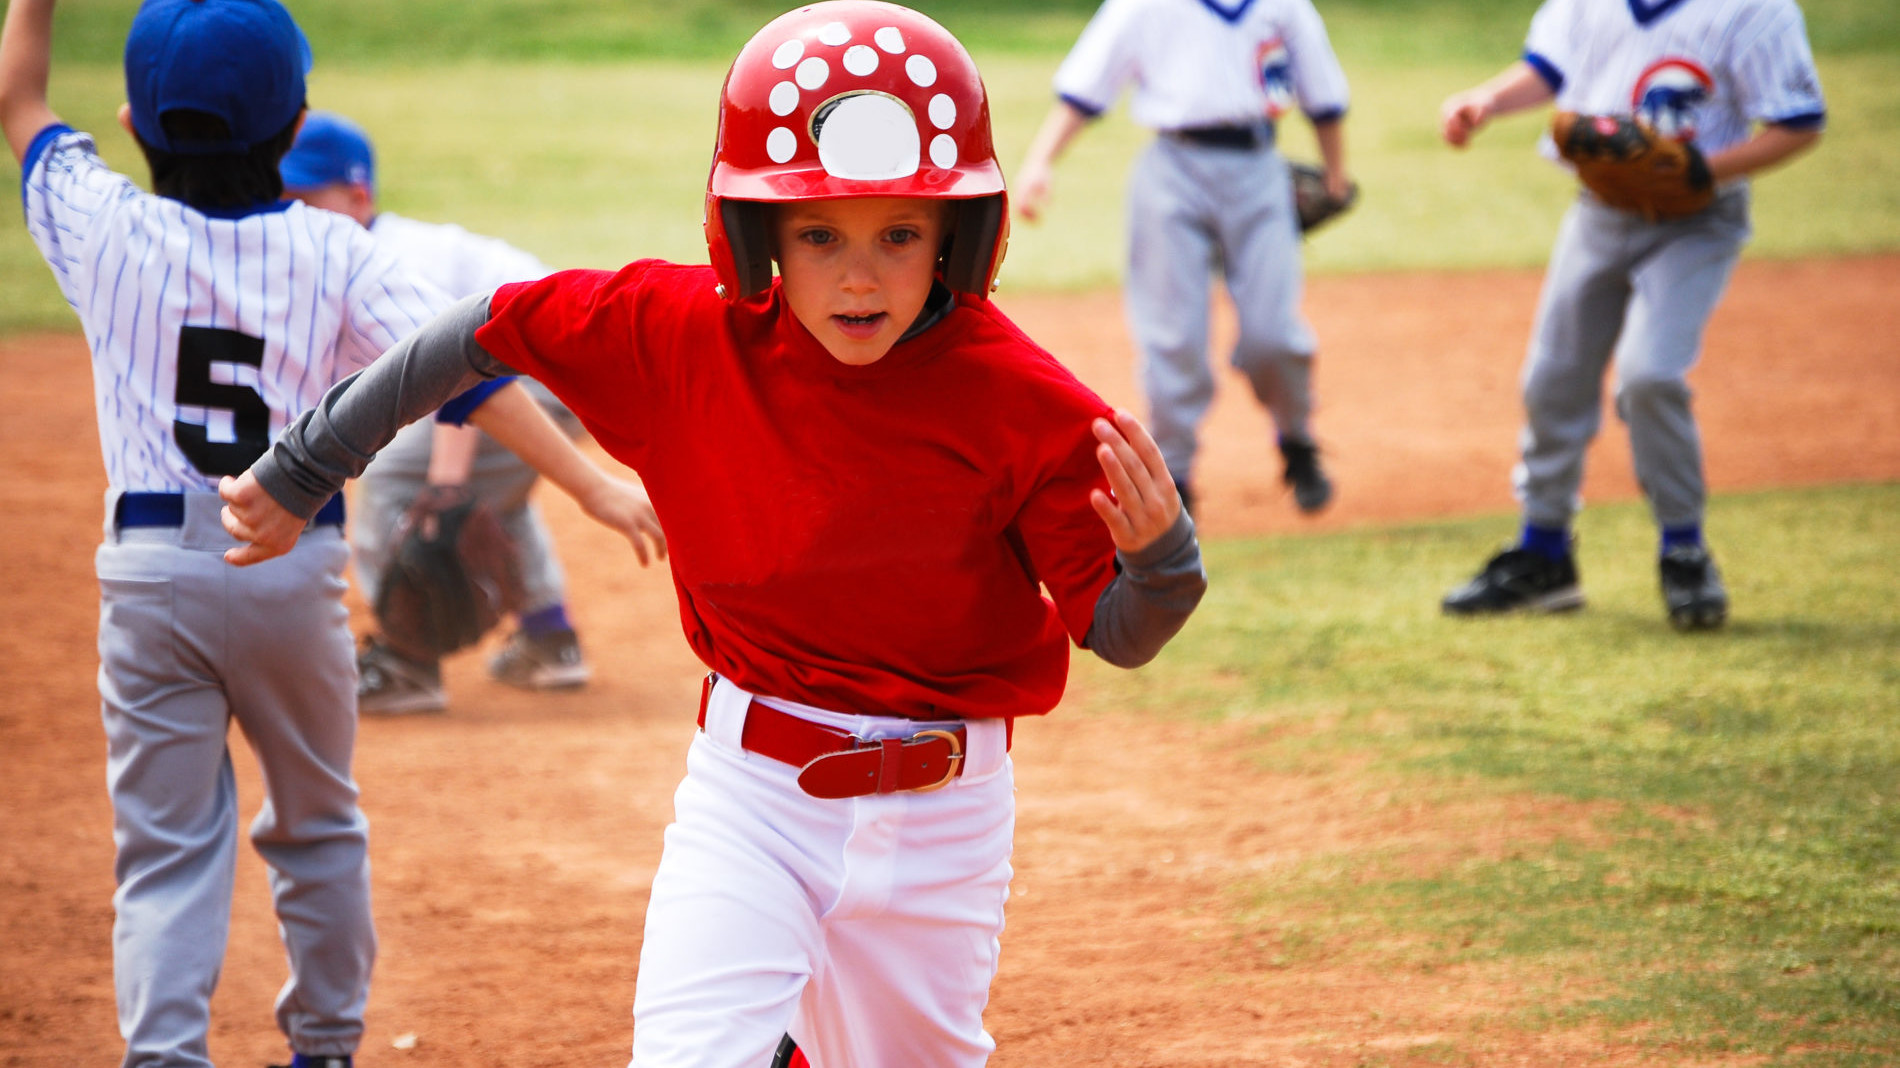 A kid running bases on a little league baseball team